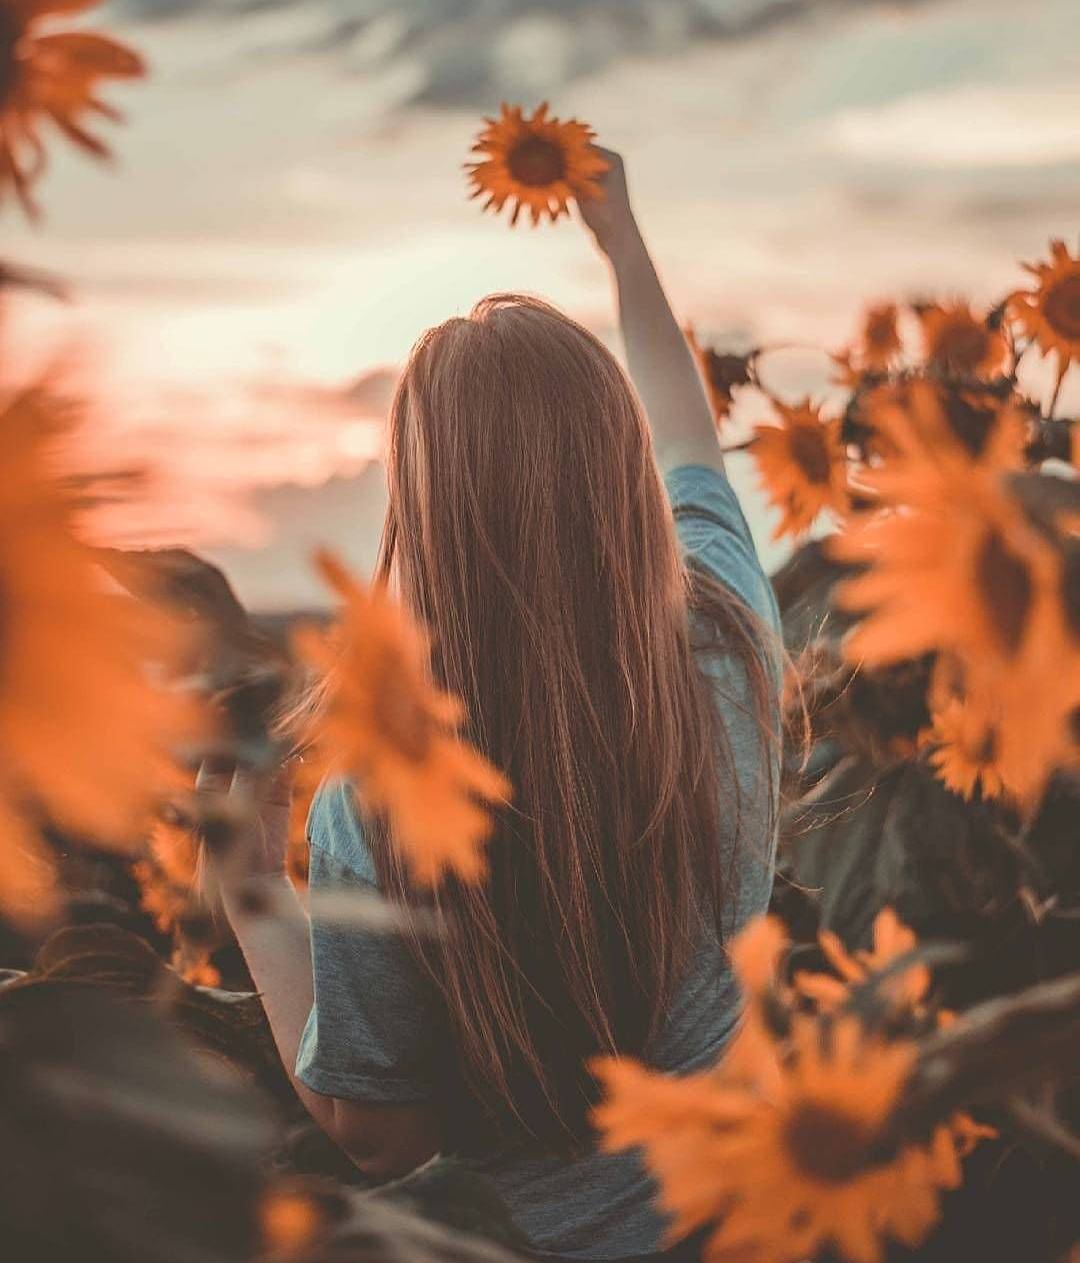 Girl And Sunflower